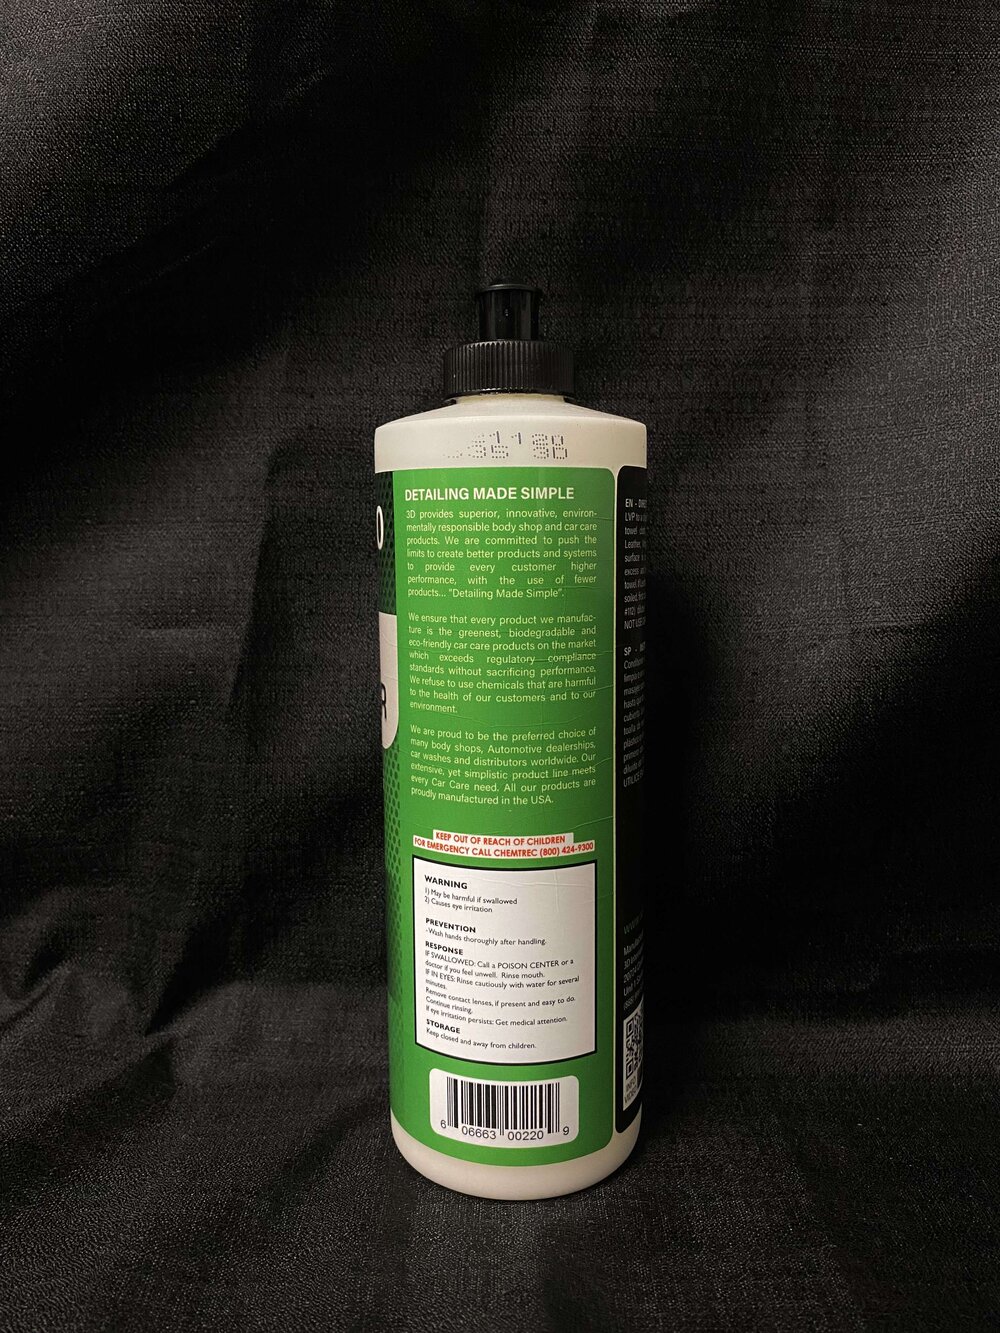 3D LVP (Leather, Vinyl, Plastic) Conditioner — Bling Bling King Clean